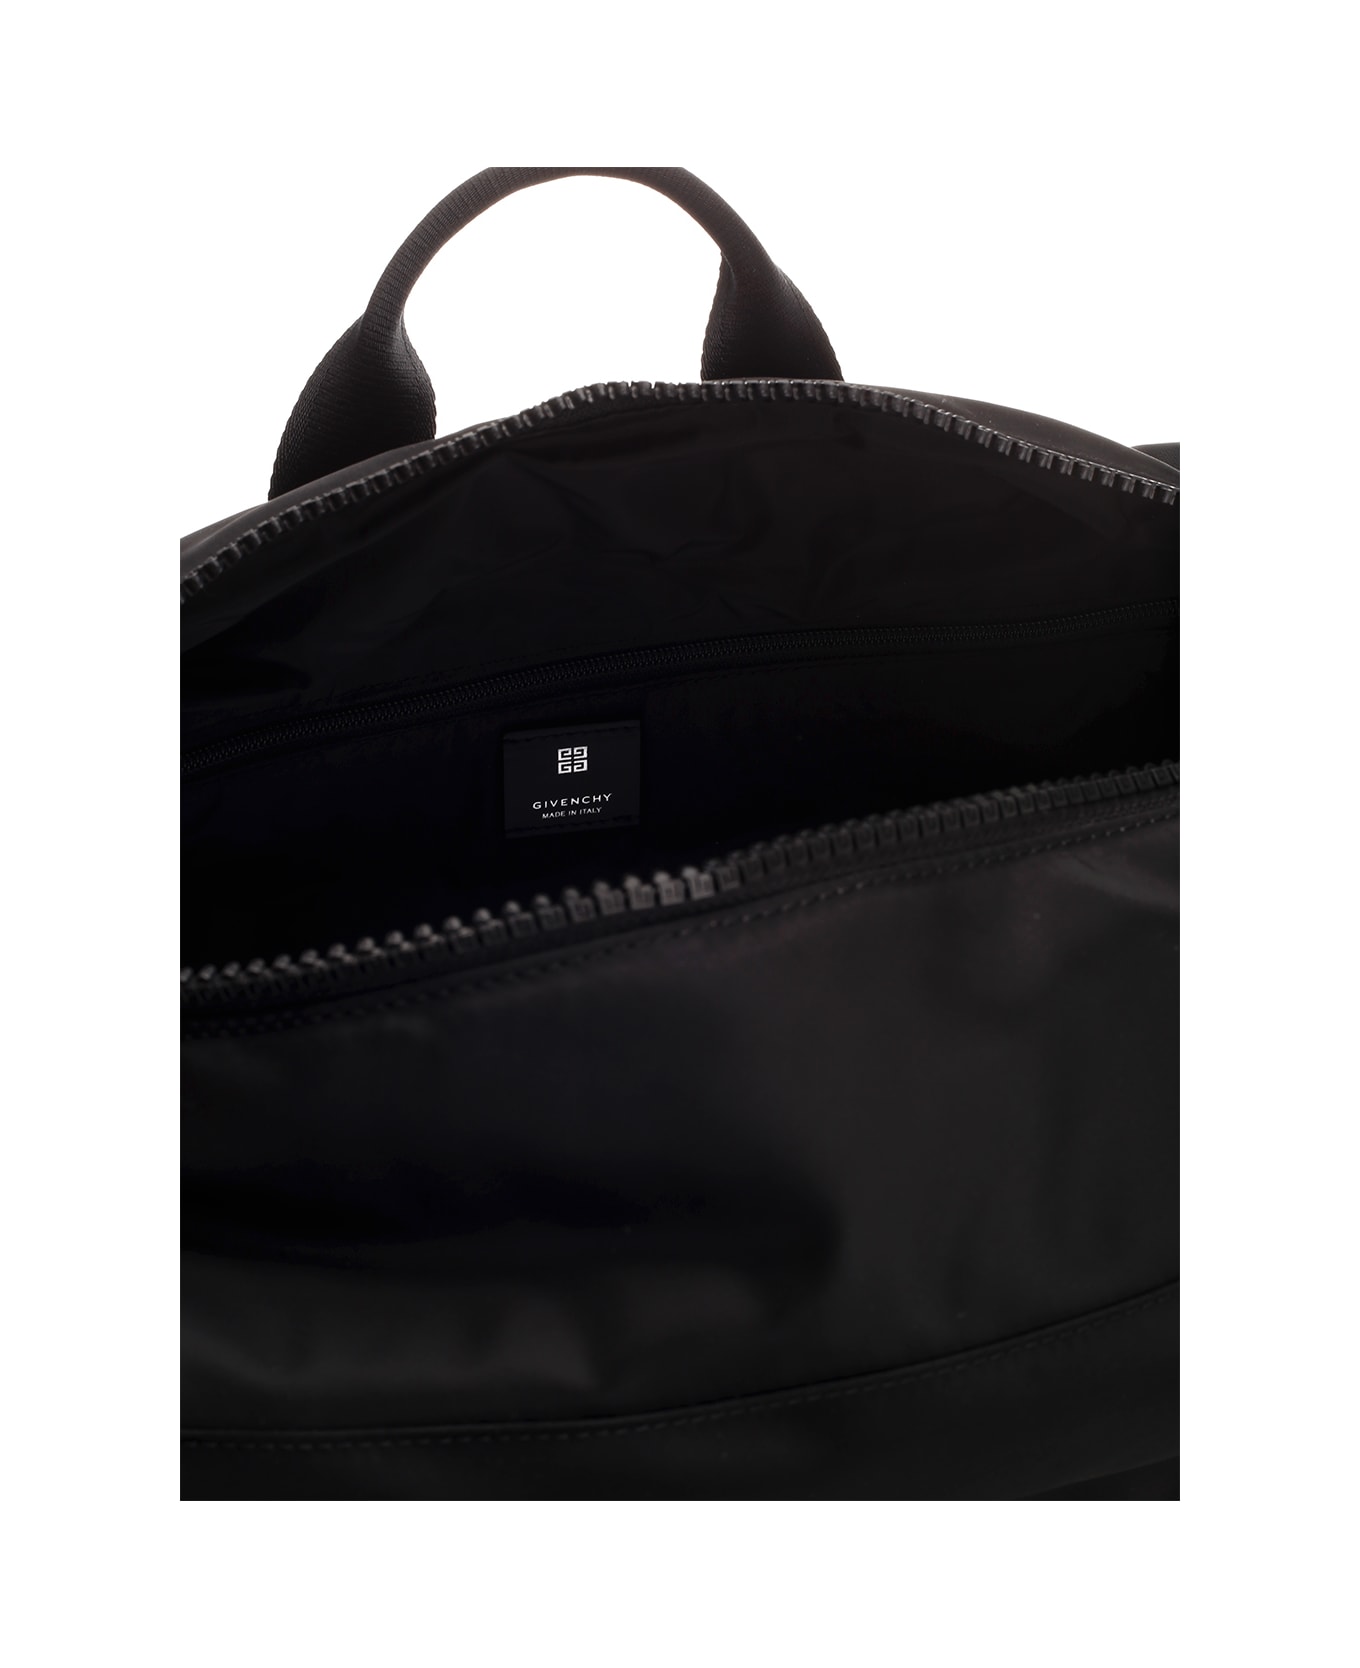 Givenchy Pandora Nylon Messenger Bag - Black